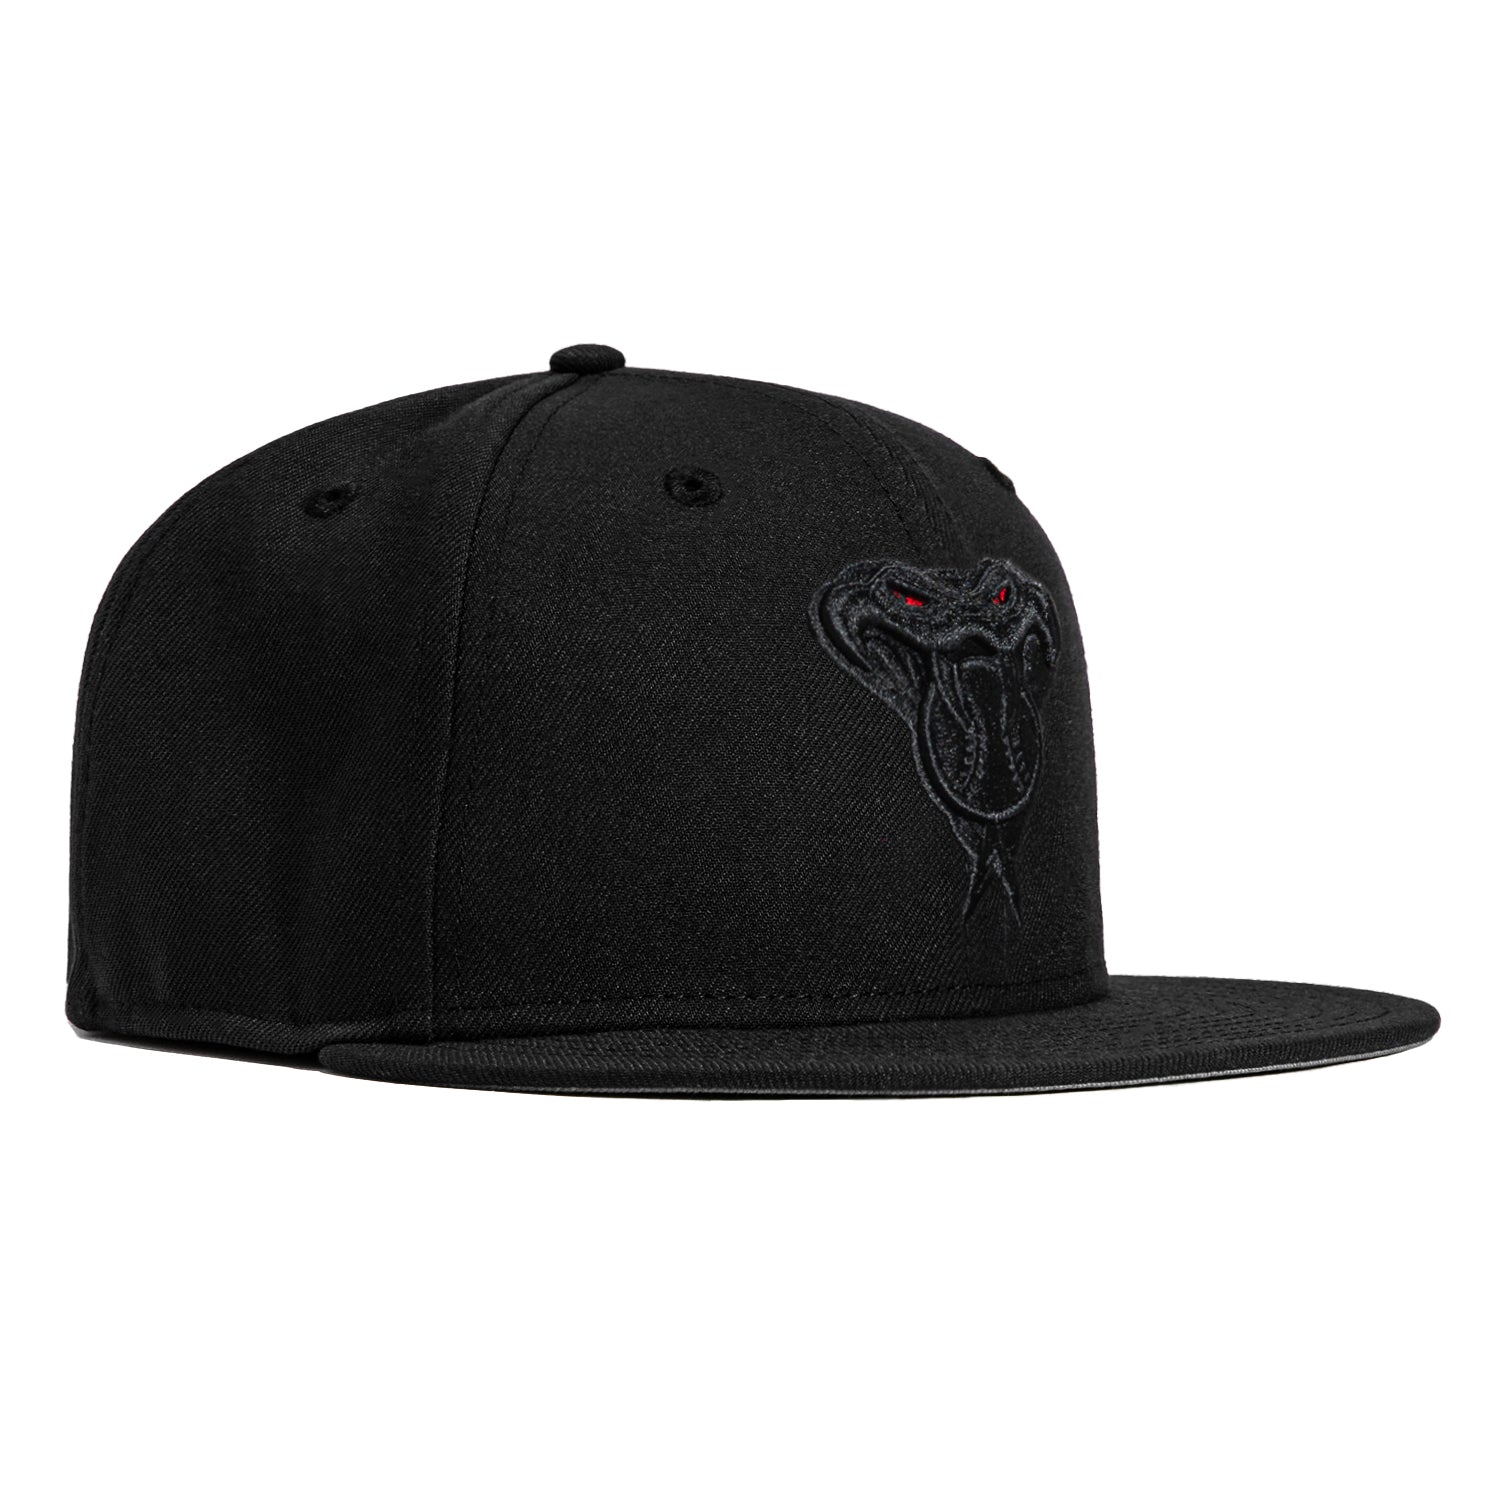 New Era 9FIFTY Arizona Diamondbacks Snake Head Snapback Hat - Black, Black, Red